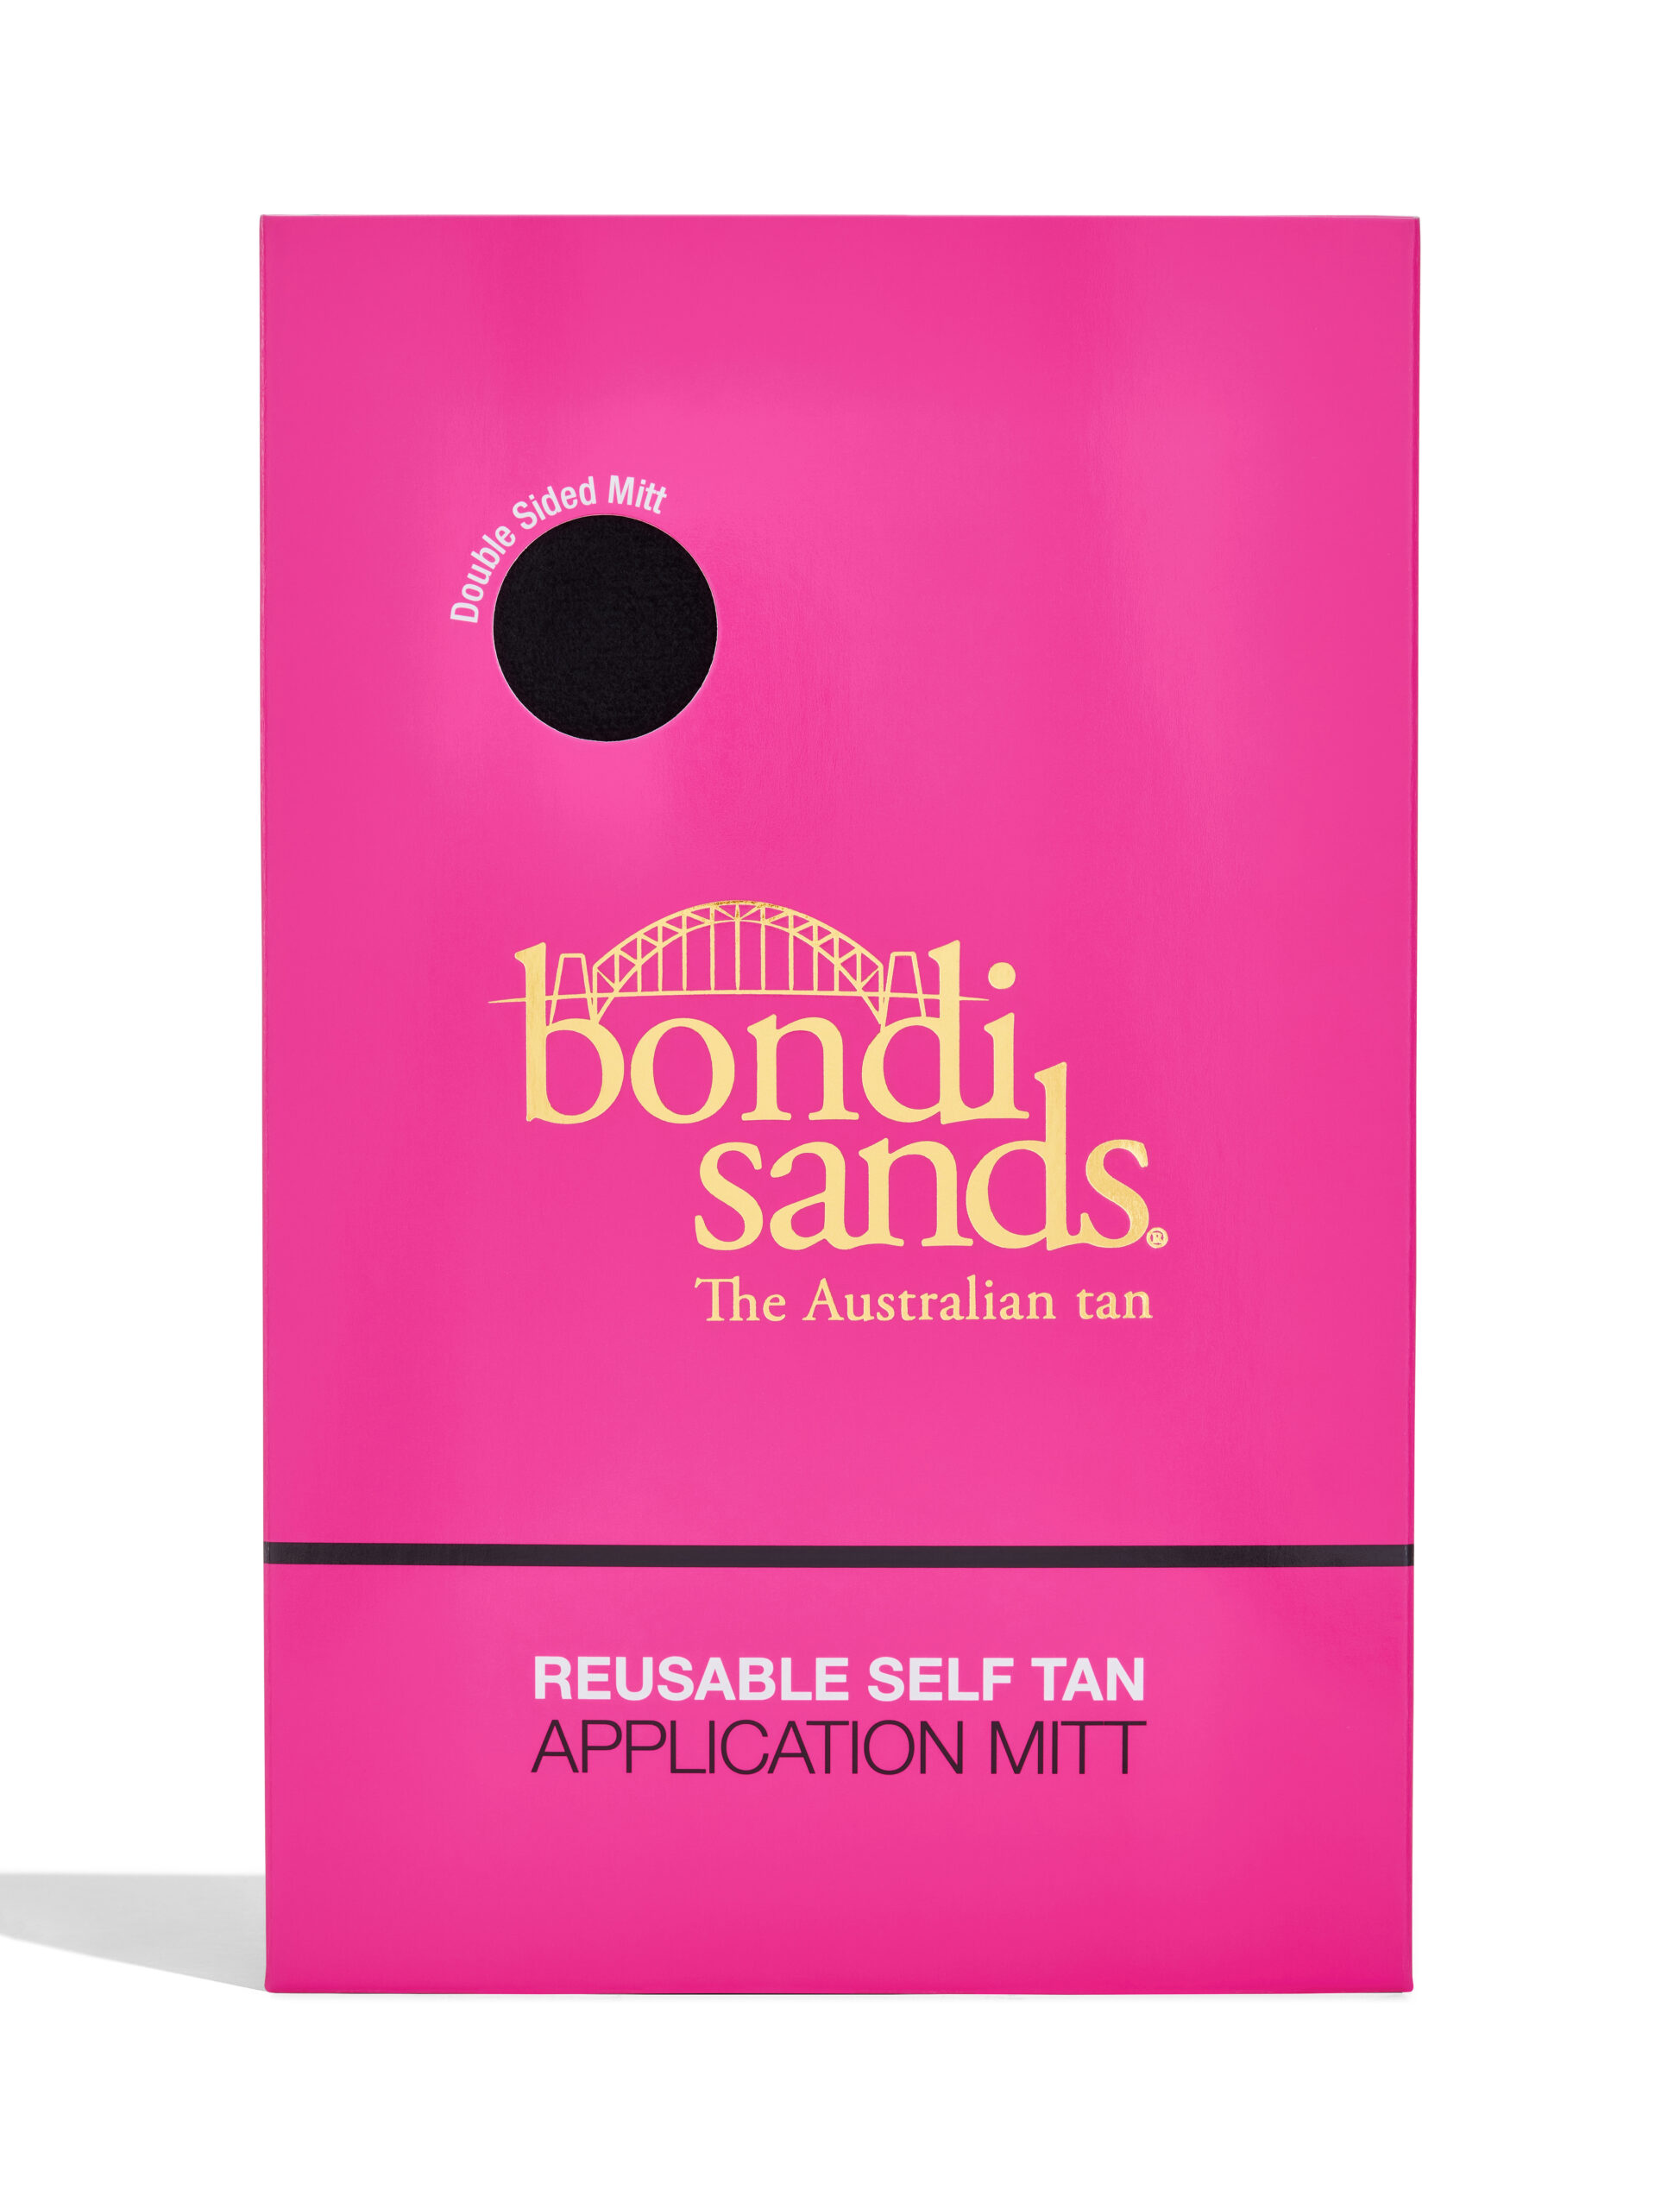 BONDI_SANDS_APPLICATION_MITT_(PINK)